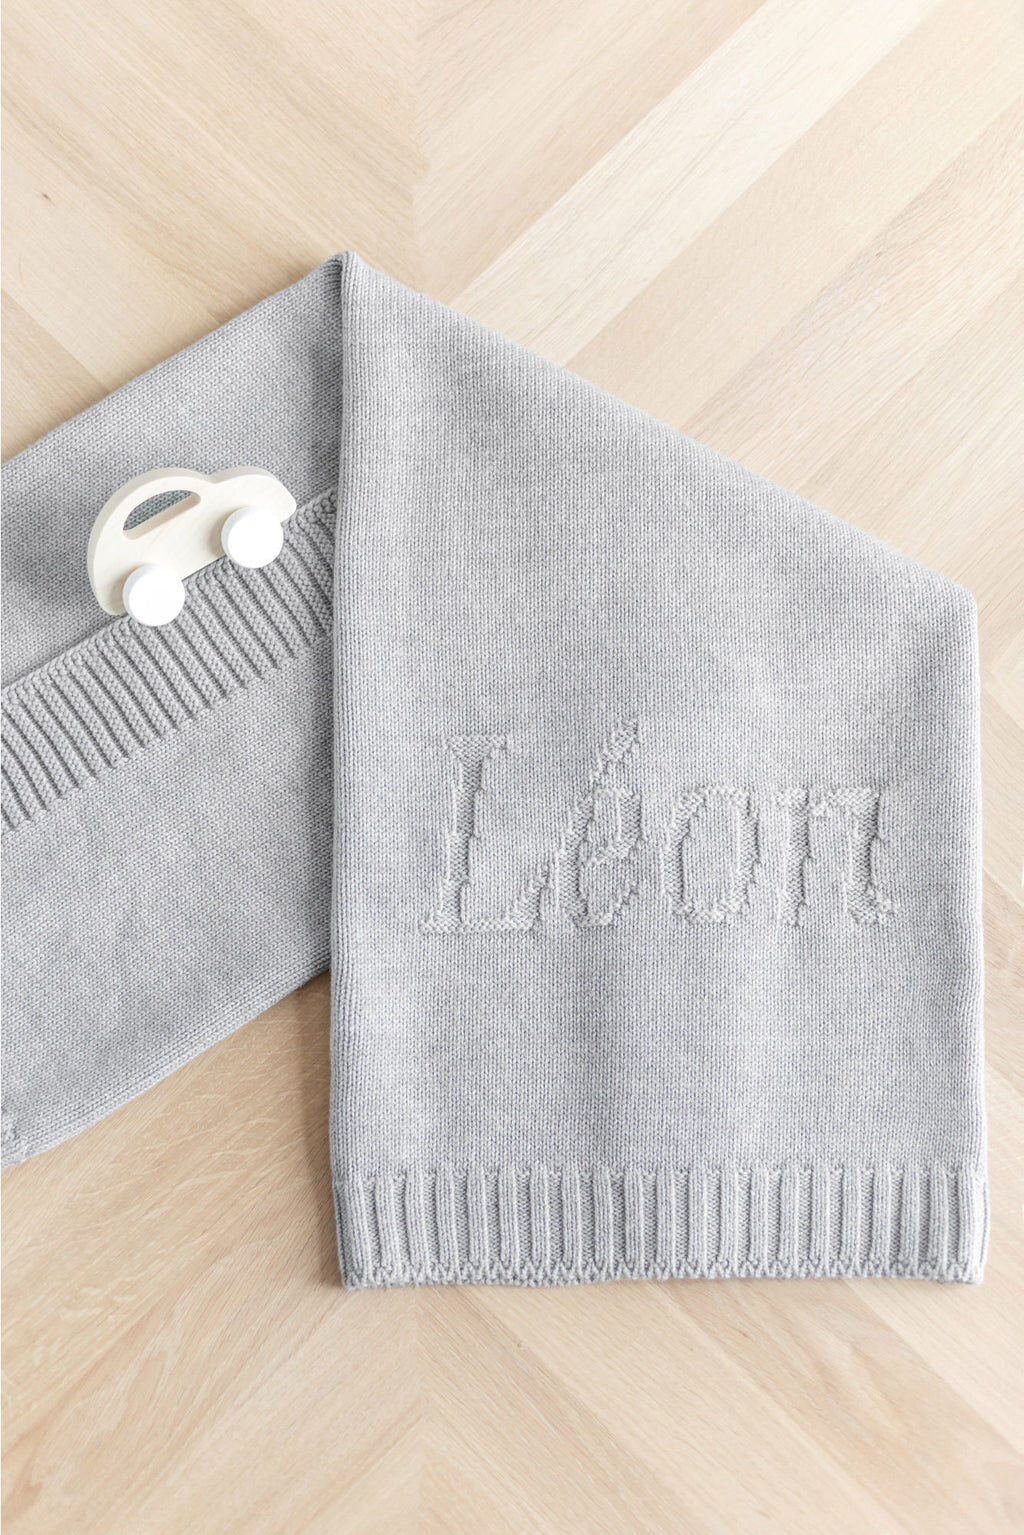 Blanket personalize - Wool Light grey